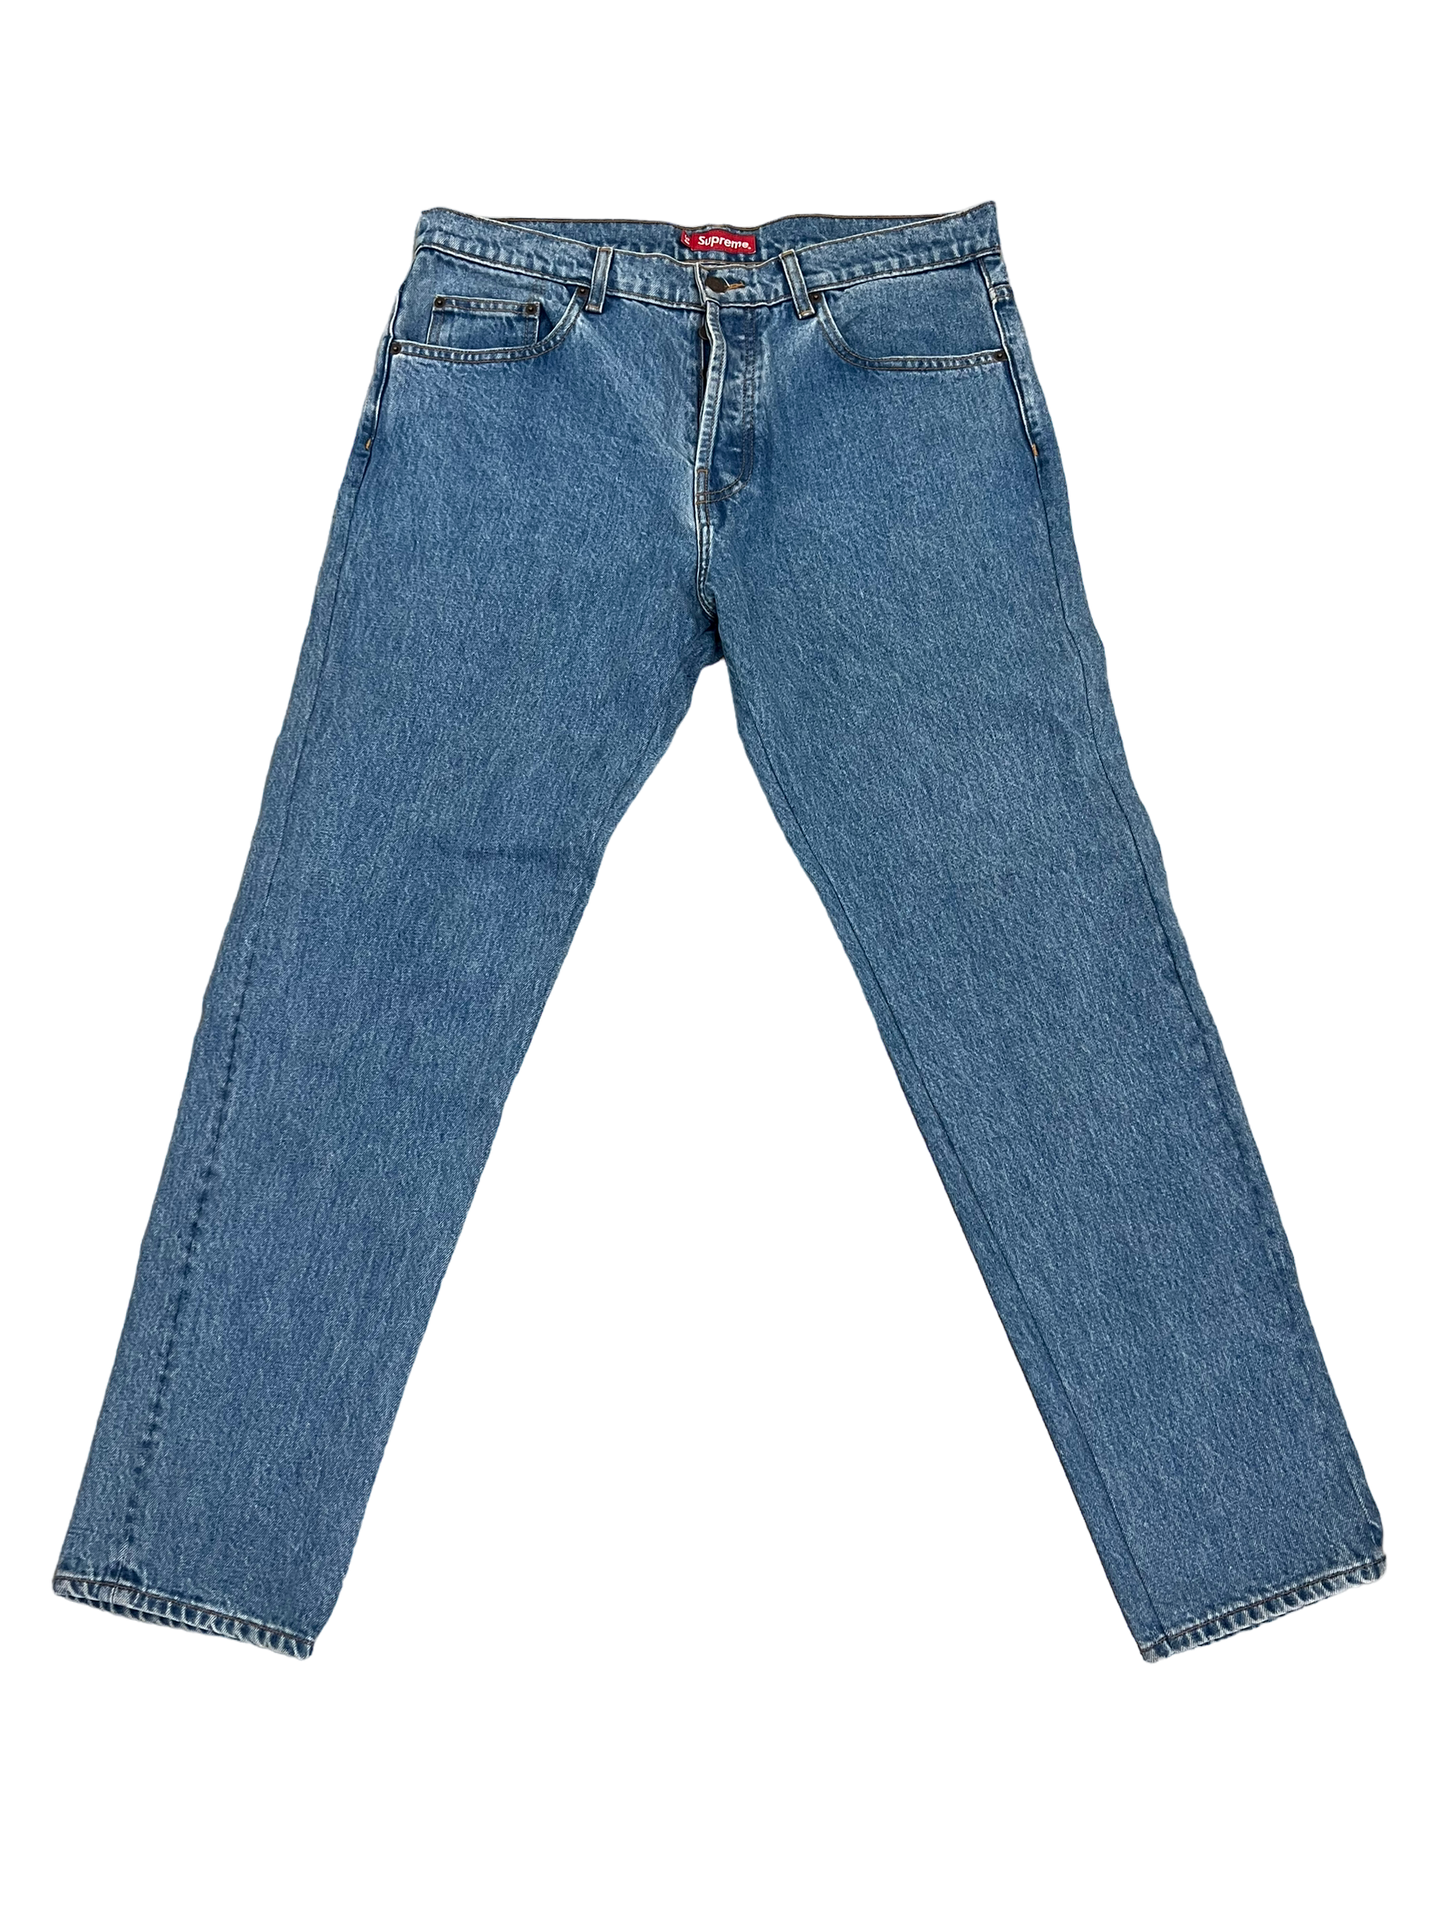 Supreme star jeans